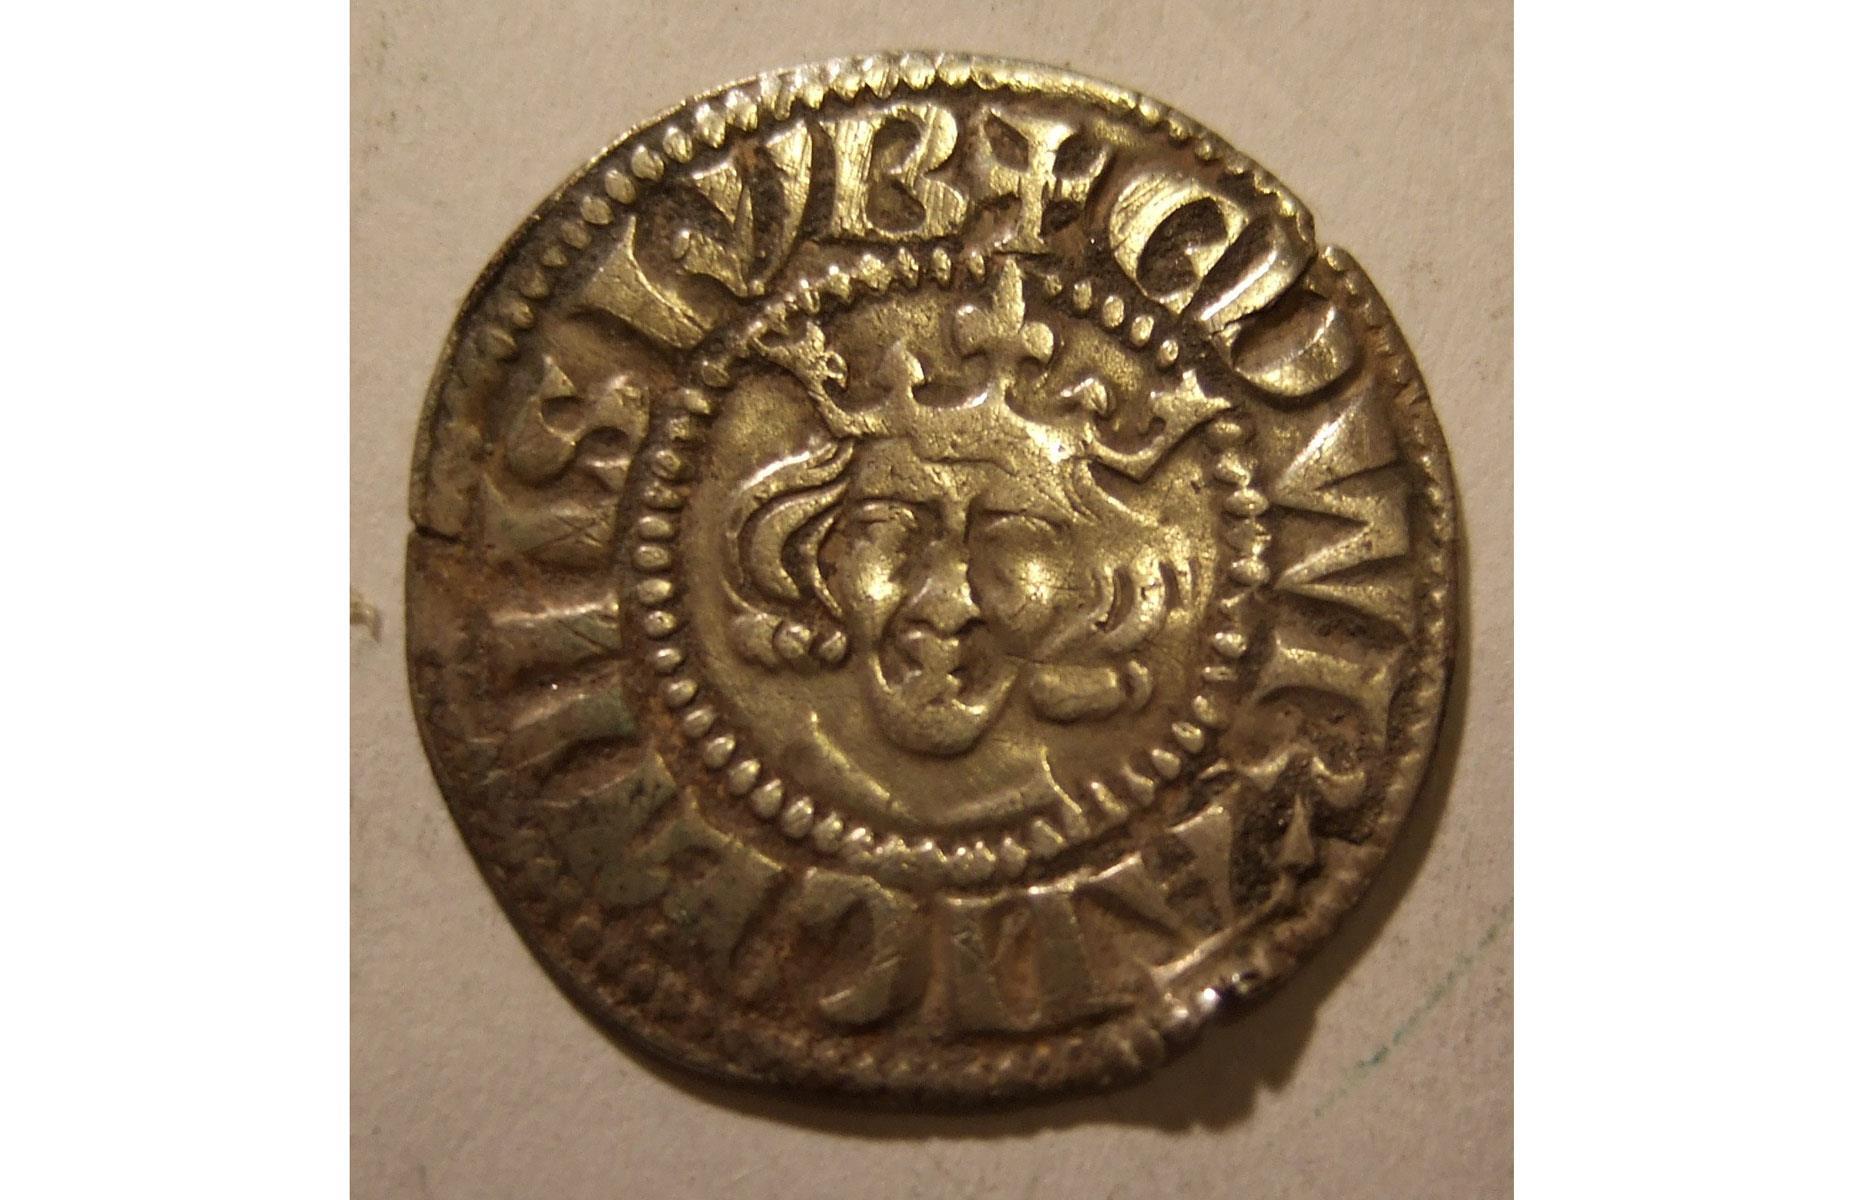 2019: The Hambleden Hoard of medieval coins